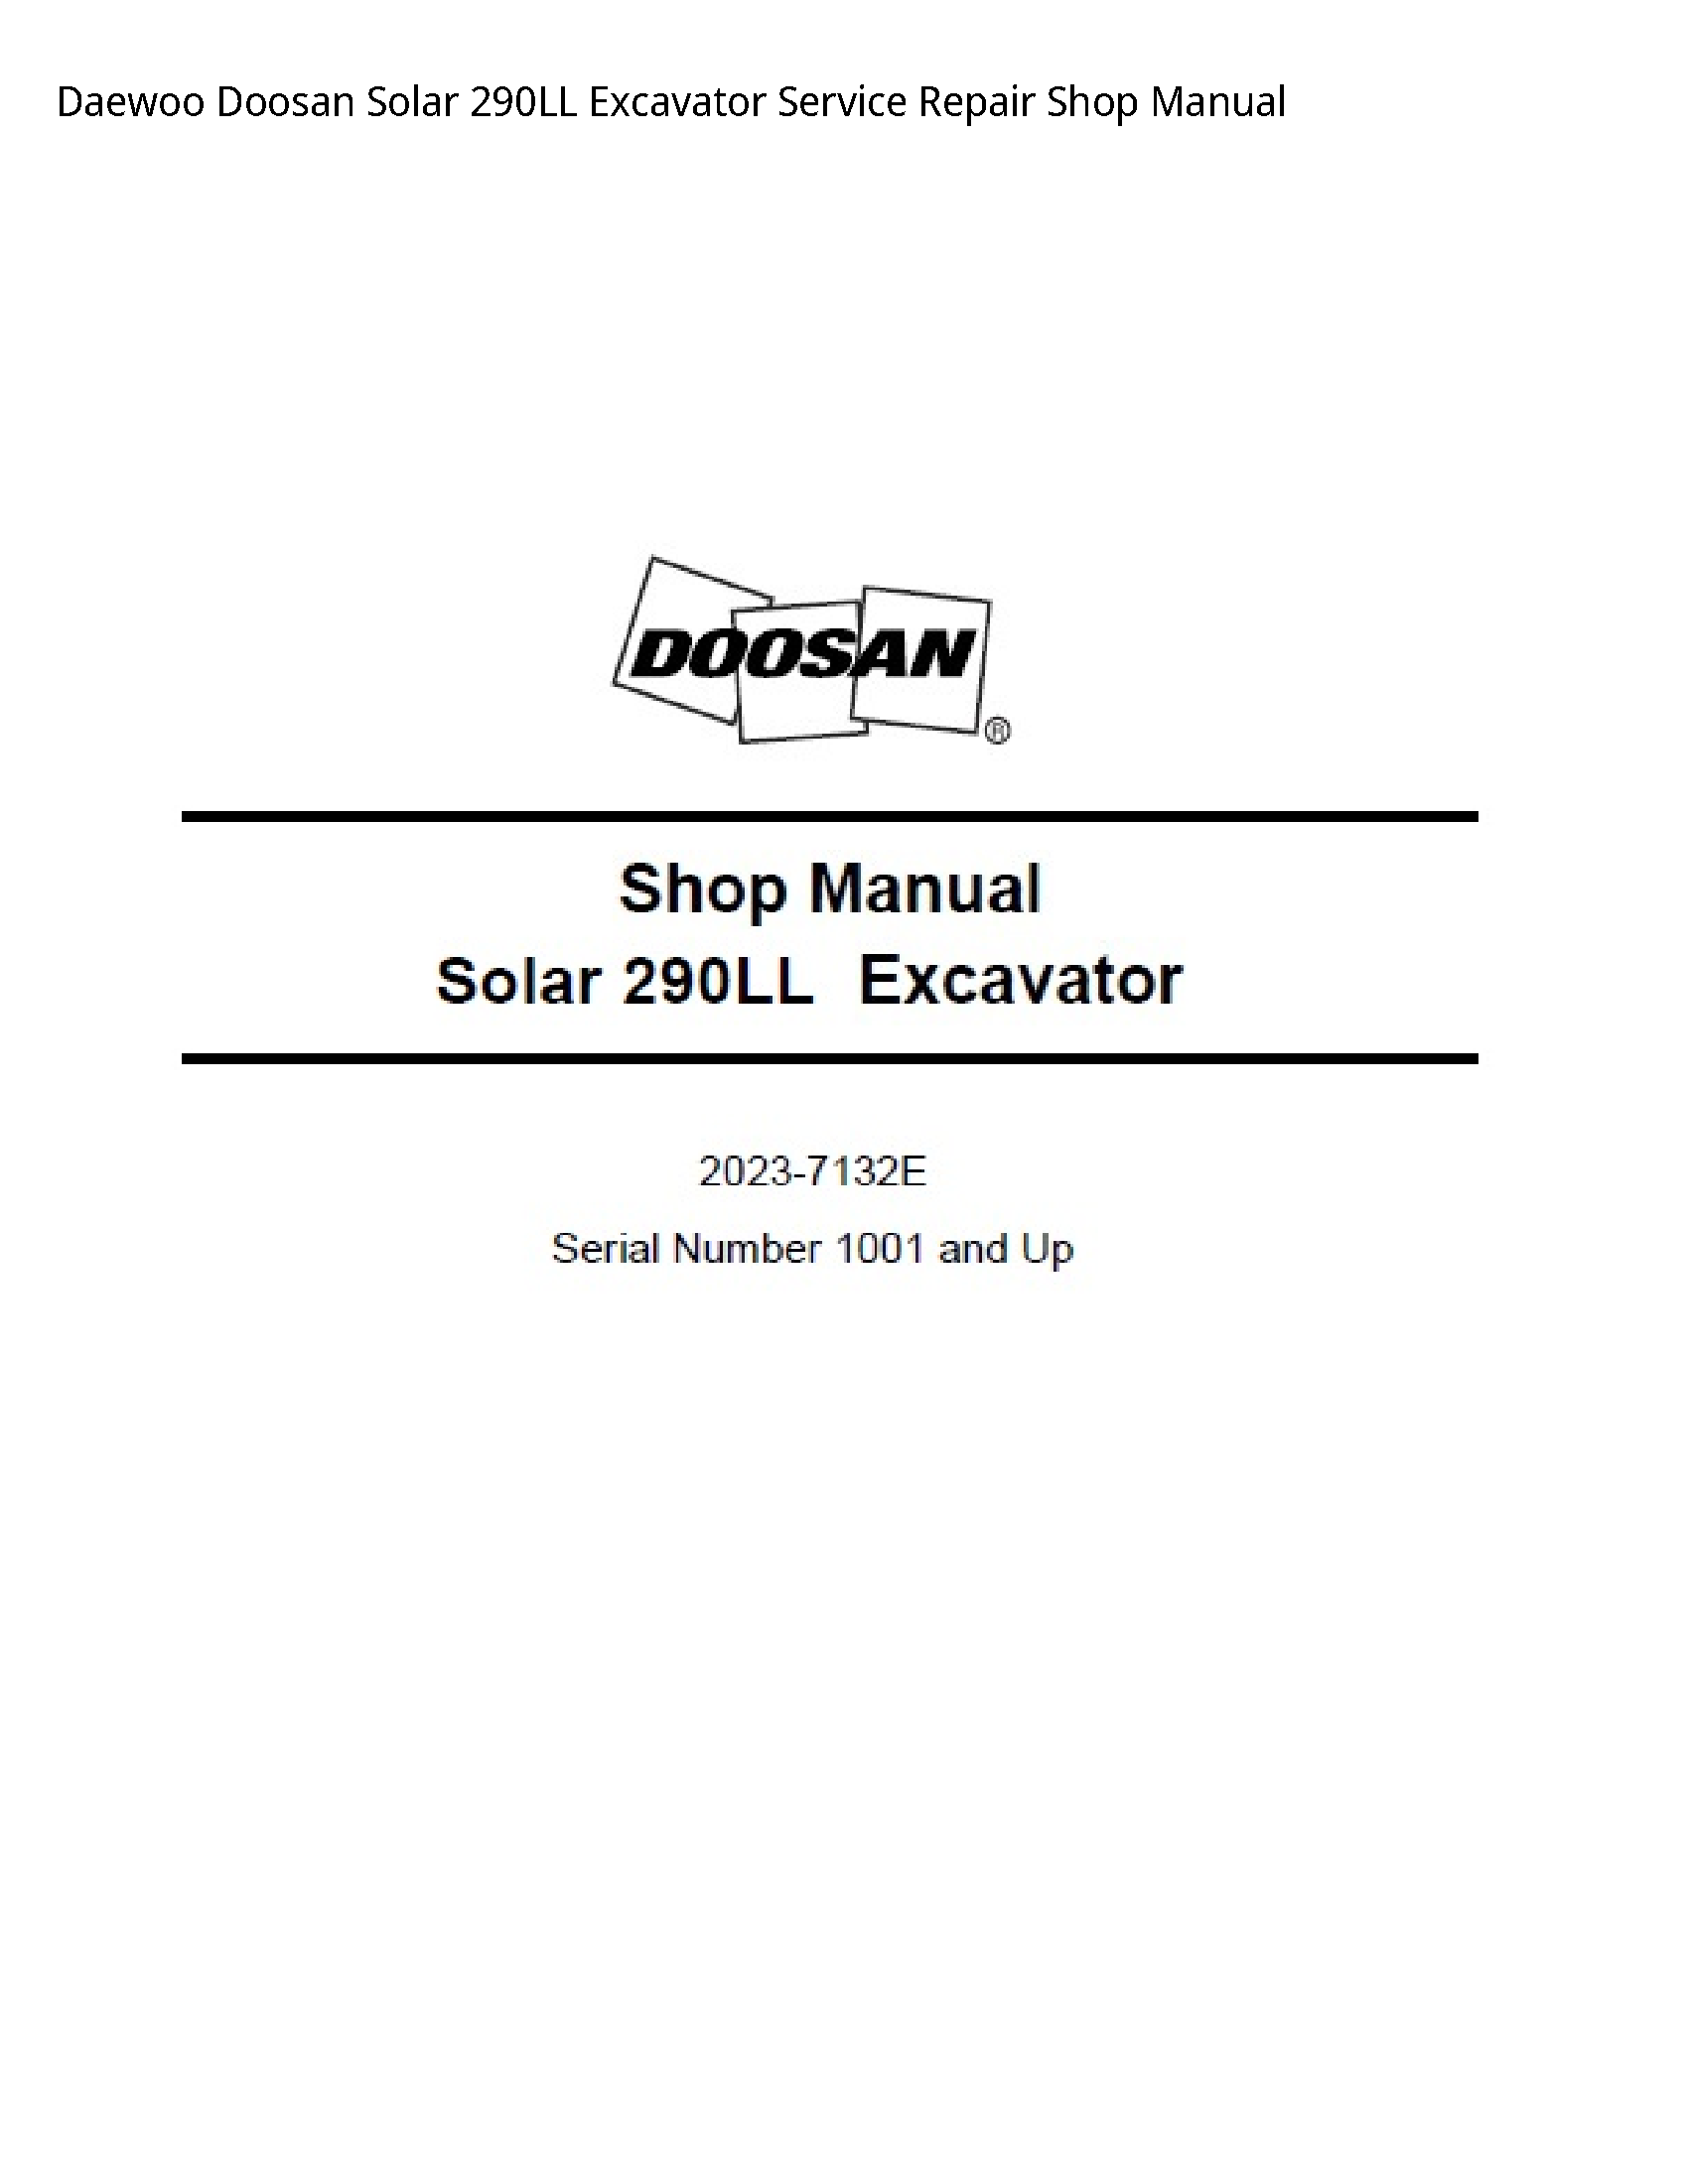 Daewoo Doosan 290LL Solar Excavator manual